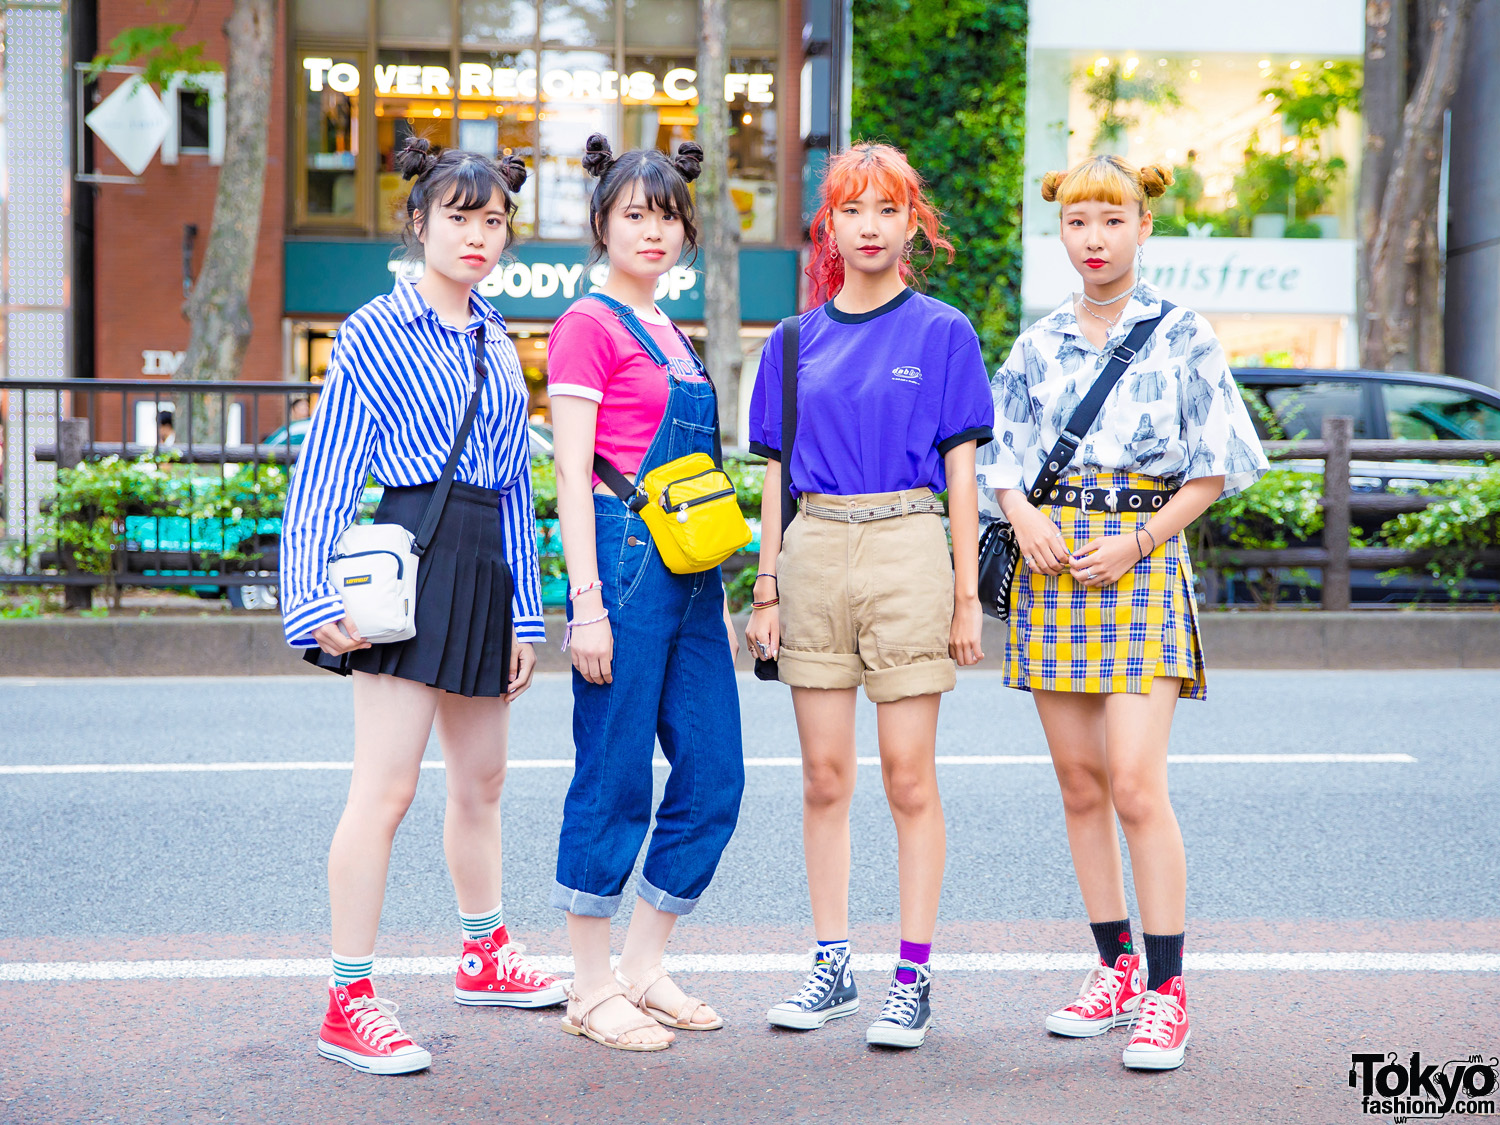 Japanese Teen Girls Street Styles & Matching Twin Buns Hairstyles, Kipling Bag & Converse Sneakers